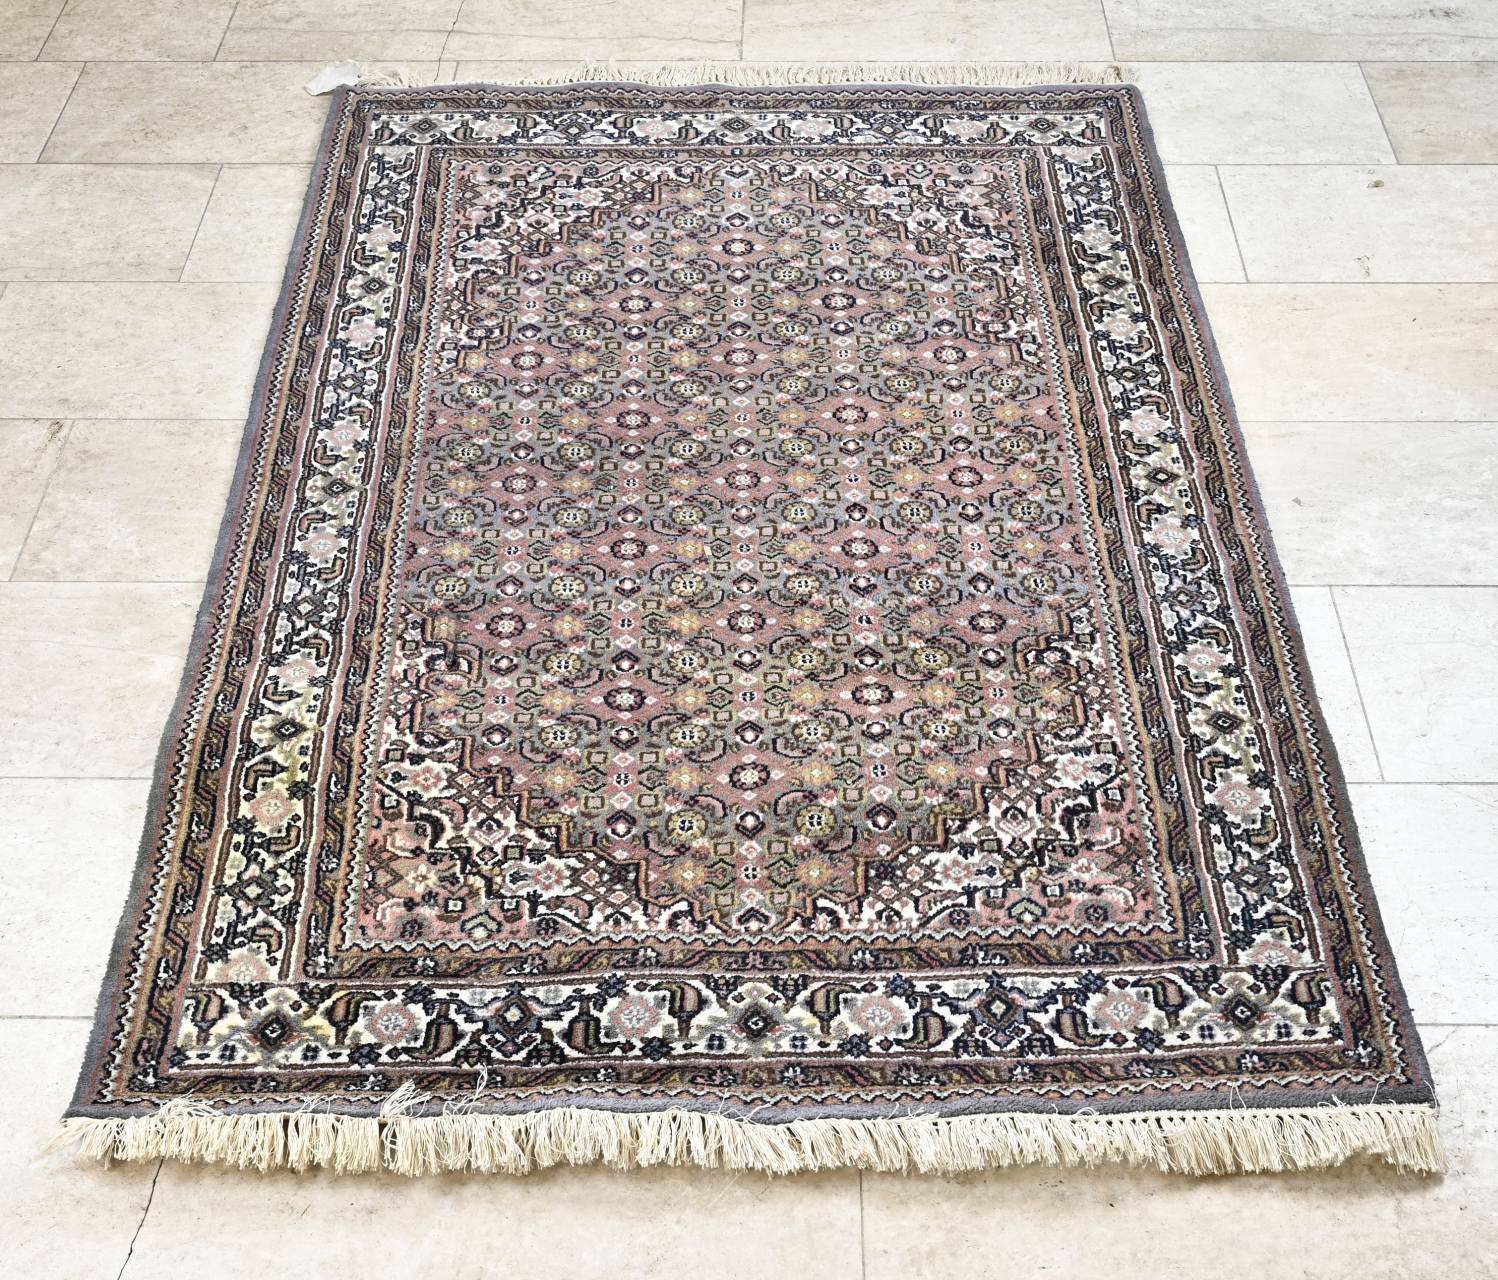 Handgeknoopt Perzisch tapijt, 188 x 127 cm.